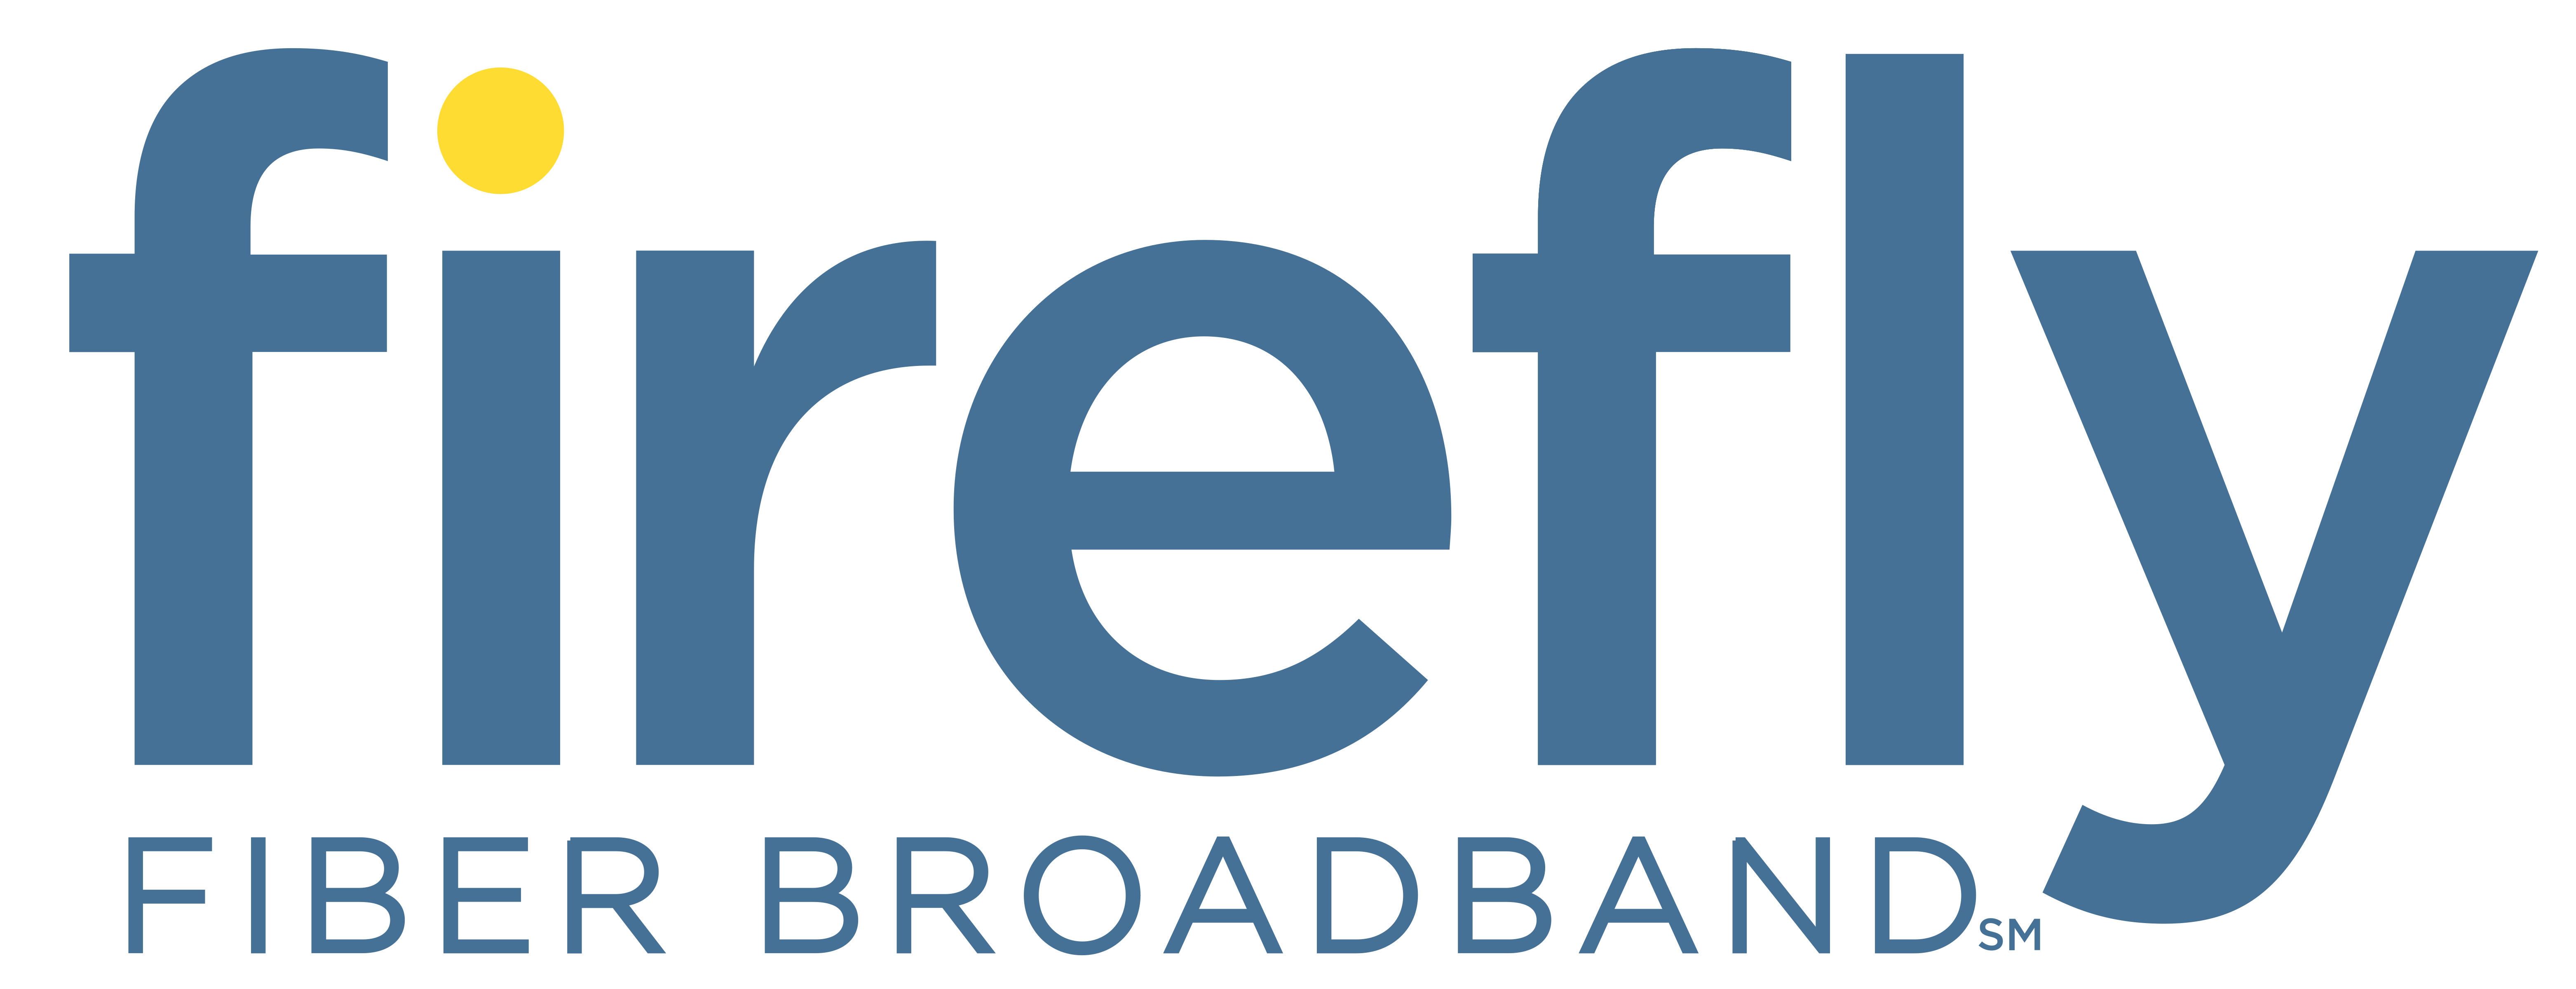 Firefly Fiber Broadband